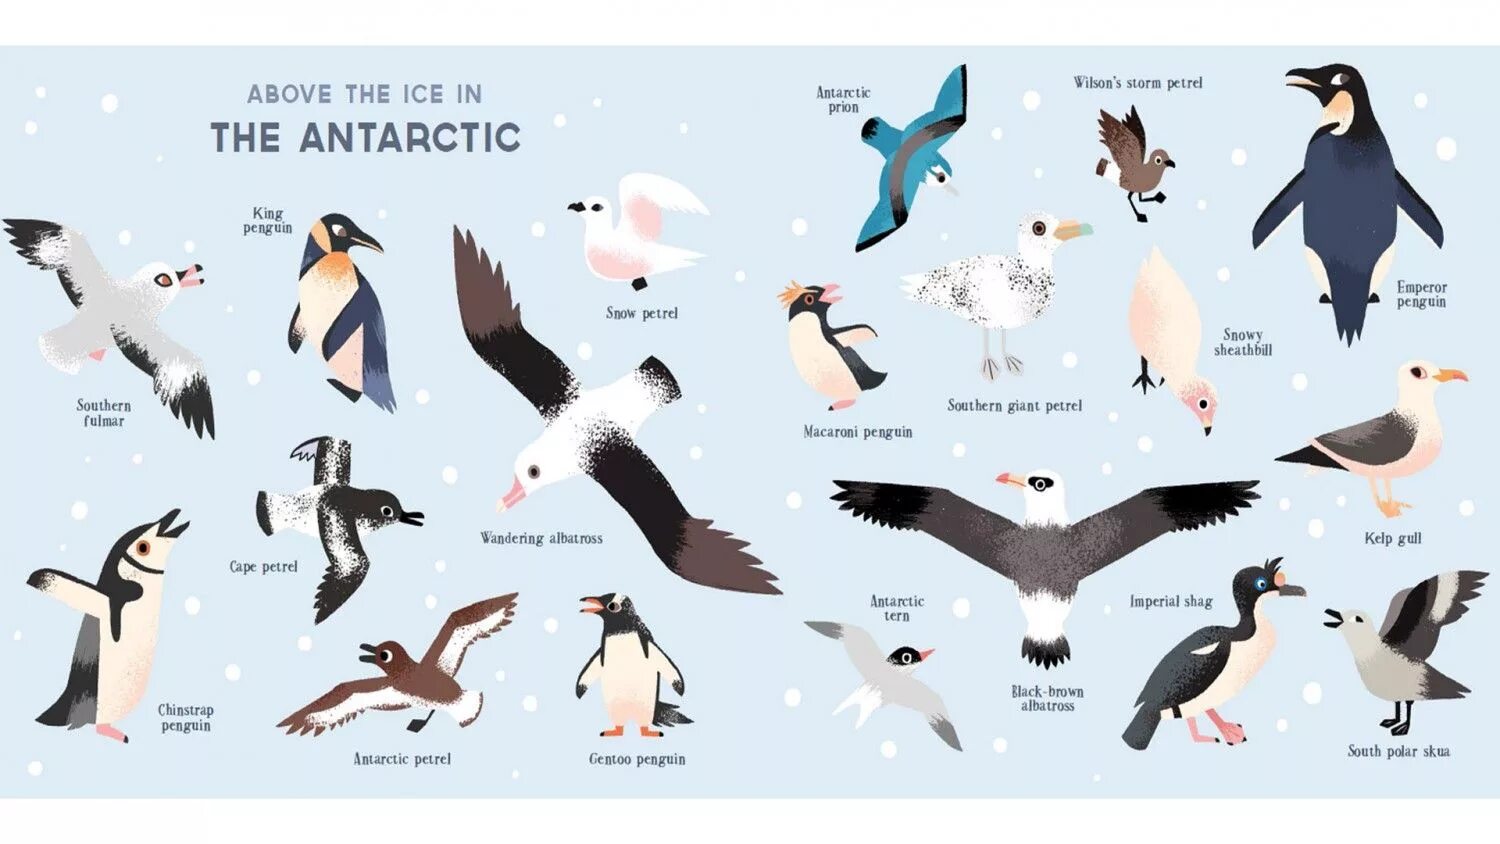 Птицы живущие в антарктиде. Обитатели Антарктиды для детей. Птицы Антарктиды список. Животные Антарктиды названия. Птицы Арктики и Антарктики для детей.